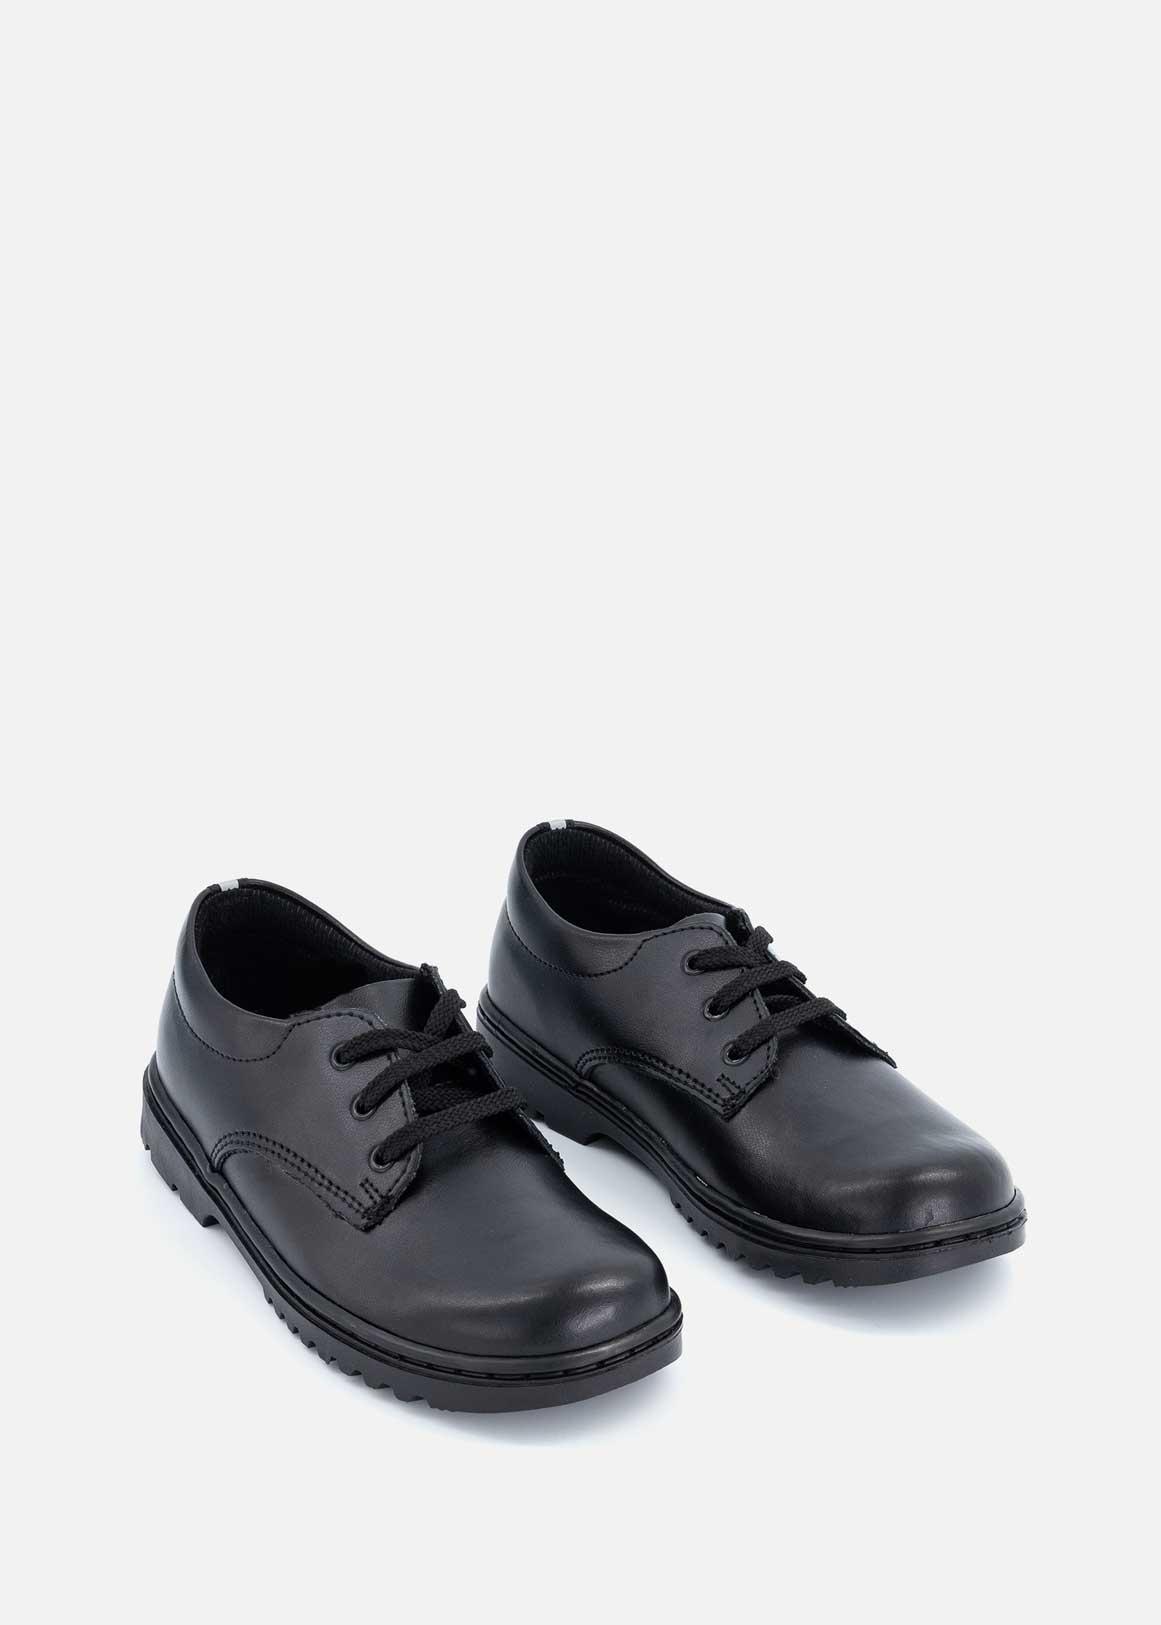 https://assets.woolworthsstatic.co.za/Lace-Up-Leather-School-Shoes-Size-8-1-Younger-Boy-BLACK-504172360.jpg?V=DGwY&o=eyJidWNrZXQiOiJ3dy1vbmxpbmUtaW1hZ2UtcmVzaXplIiwia2V5IjoiaW1hZ2VzL2VsYXN0aWNlcmEvcHJvZHVjdHMvaGVyby8yMDIyLTA0LTA1LzUwNDE3MjM2MF9CTEFDS19oZXJvLmpwZyJ9&q=75